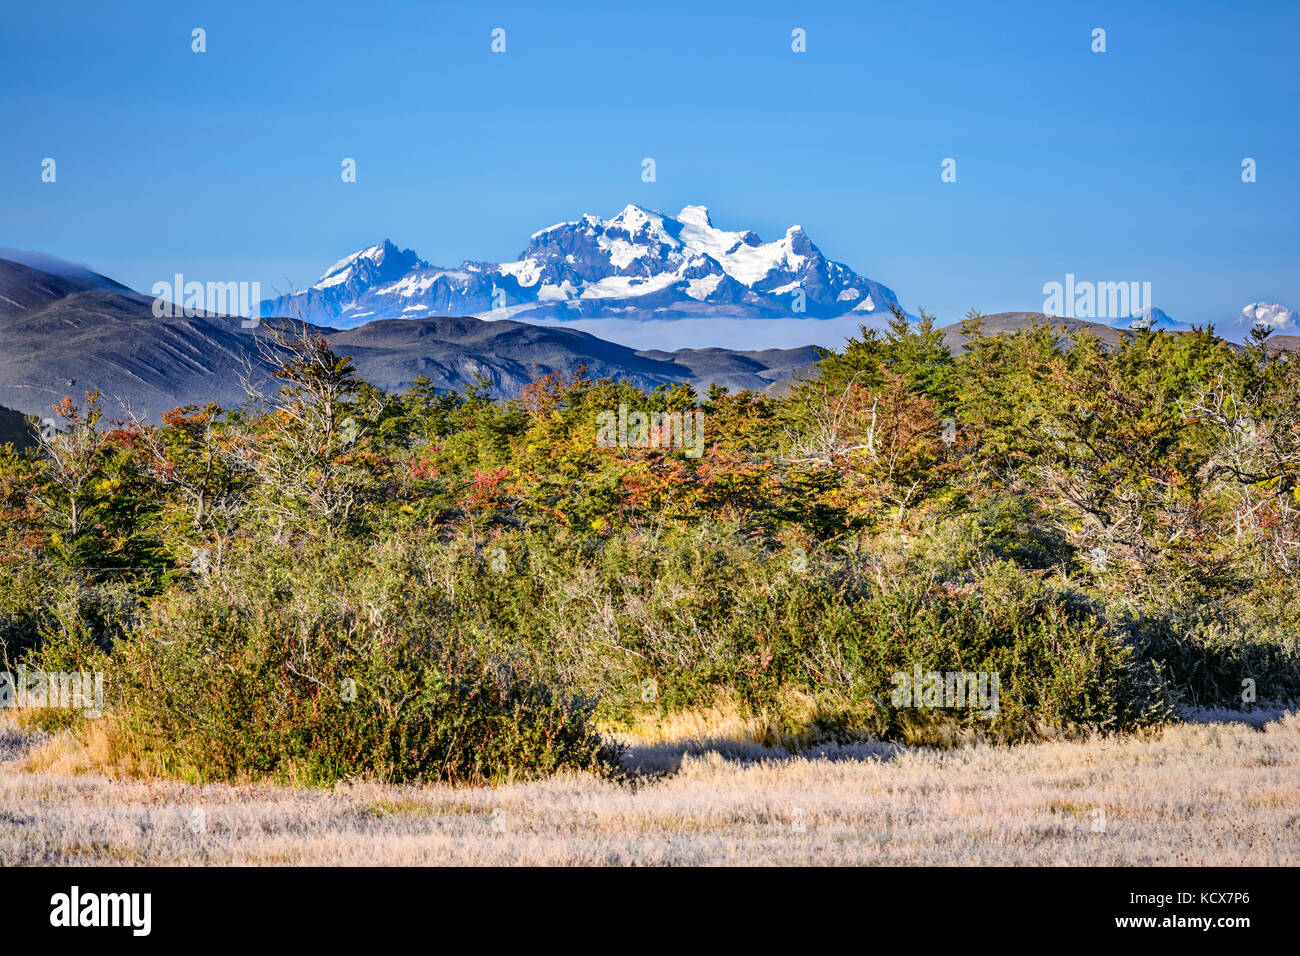 Torres del Paine, Patagonia, Cile - Patagonia meridionale del campo di ghiaccio, magellanes regione del sud america Foto Stock